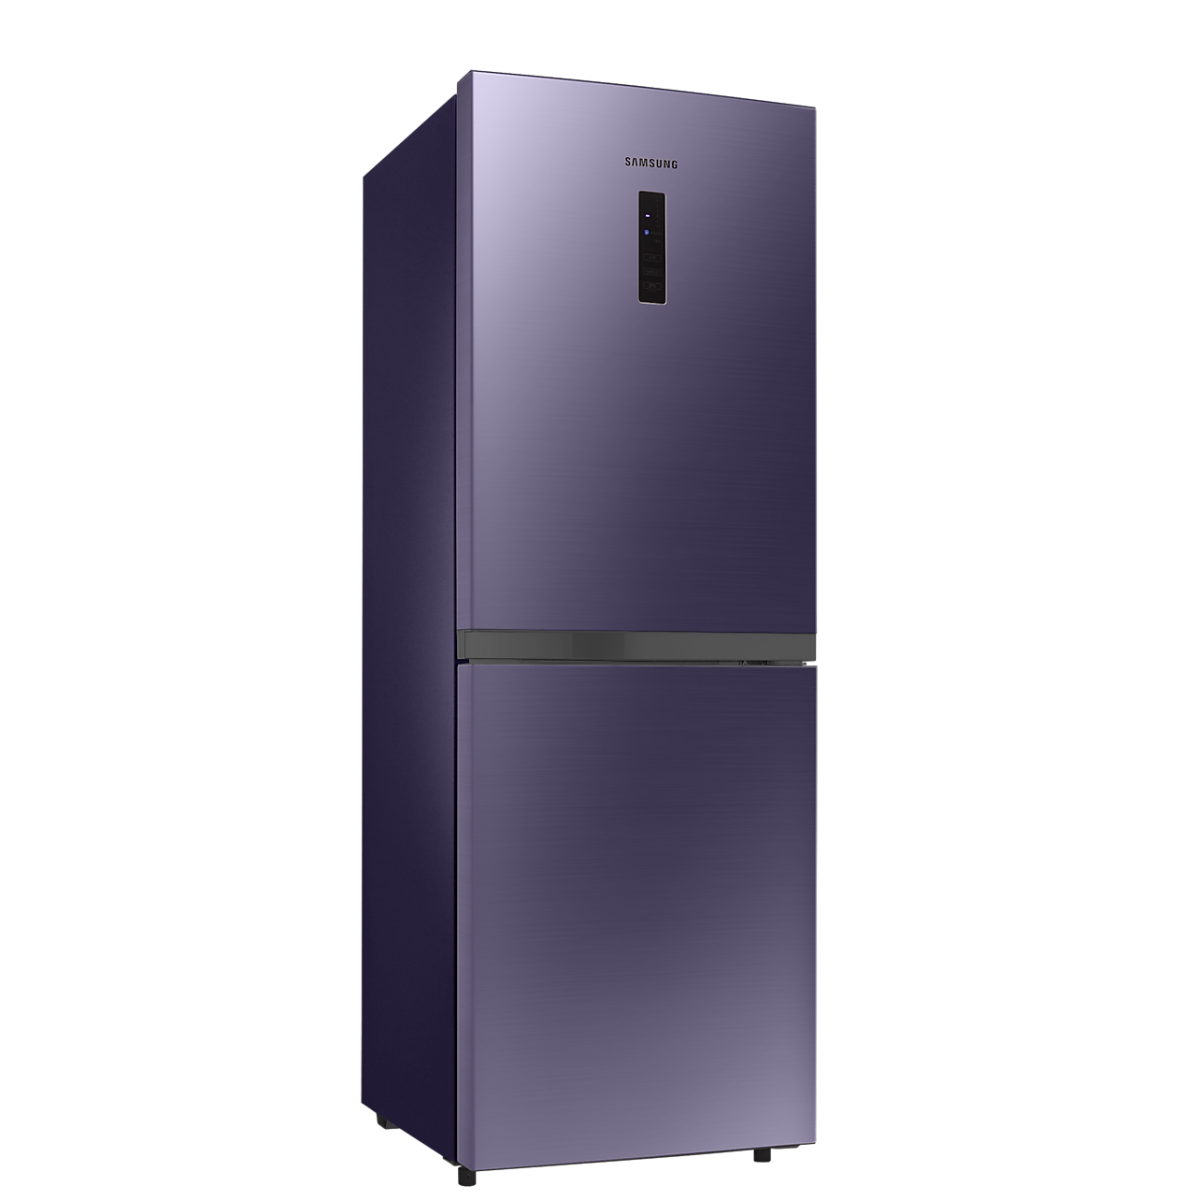 SAMSUNG 218 Liter Refrigerator with Digtial Inverter Technology RB21KMFH5UT/D3 , Best Refrigerators of Year, Top-rated Refrigerators, Refrigerator Reviews, Refrigerator Comparison, Buying a Refrigerator Guide, Refrigerator Deals and Offers Best Refrigerators of Year, Top-rated Refrigerators, Refrigerator Reviews, Refrigerator Comparison, Buying a Refrigerator Guide, Refrigerator Deals and Offers, Best refrigerators in Chittagong, Best selling refrigerators in Chittagong, Best Electronics Store in Chittagong, Meem Electronics, MeemElectronics, Best Deal of Refrigerator, SAMSUNG Refrigerator price in Chittagong, SAMSUNG Refrigerator price in Bangladersh, 218 Liter Refrigerator, SAMSUNG Refrigerator, 01919382008, 01919382009, 019193820010